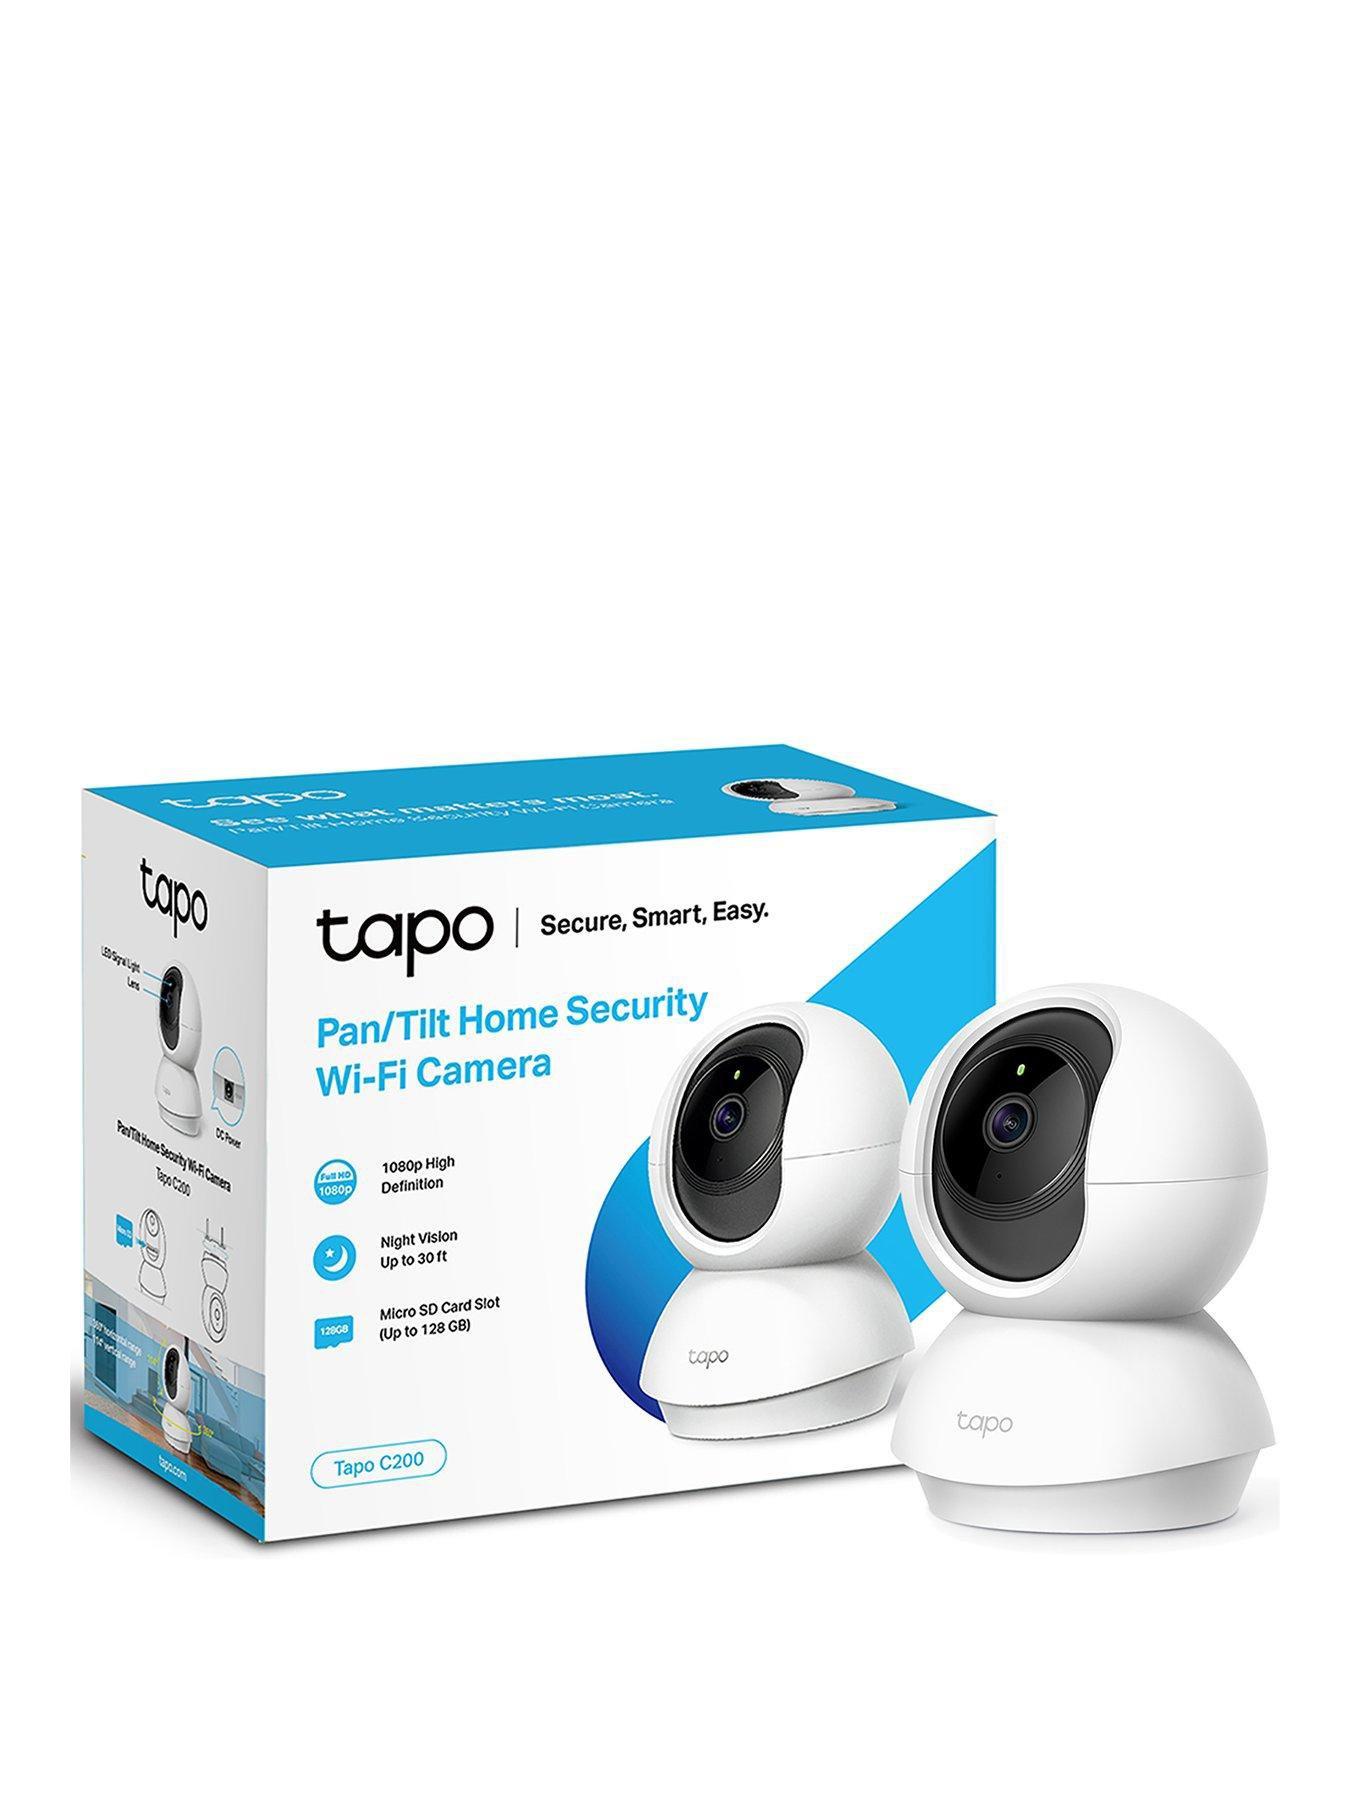 Tapo C200 Smart Pan & Tilt Cam